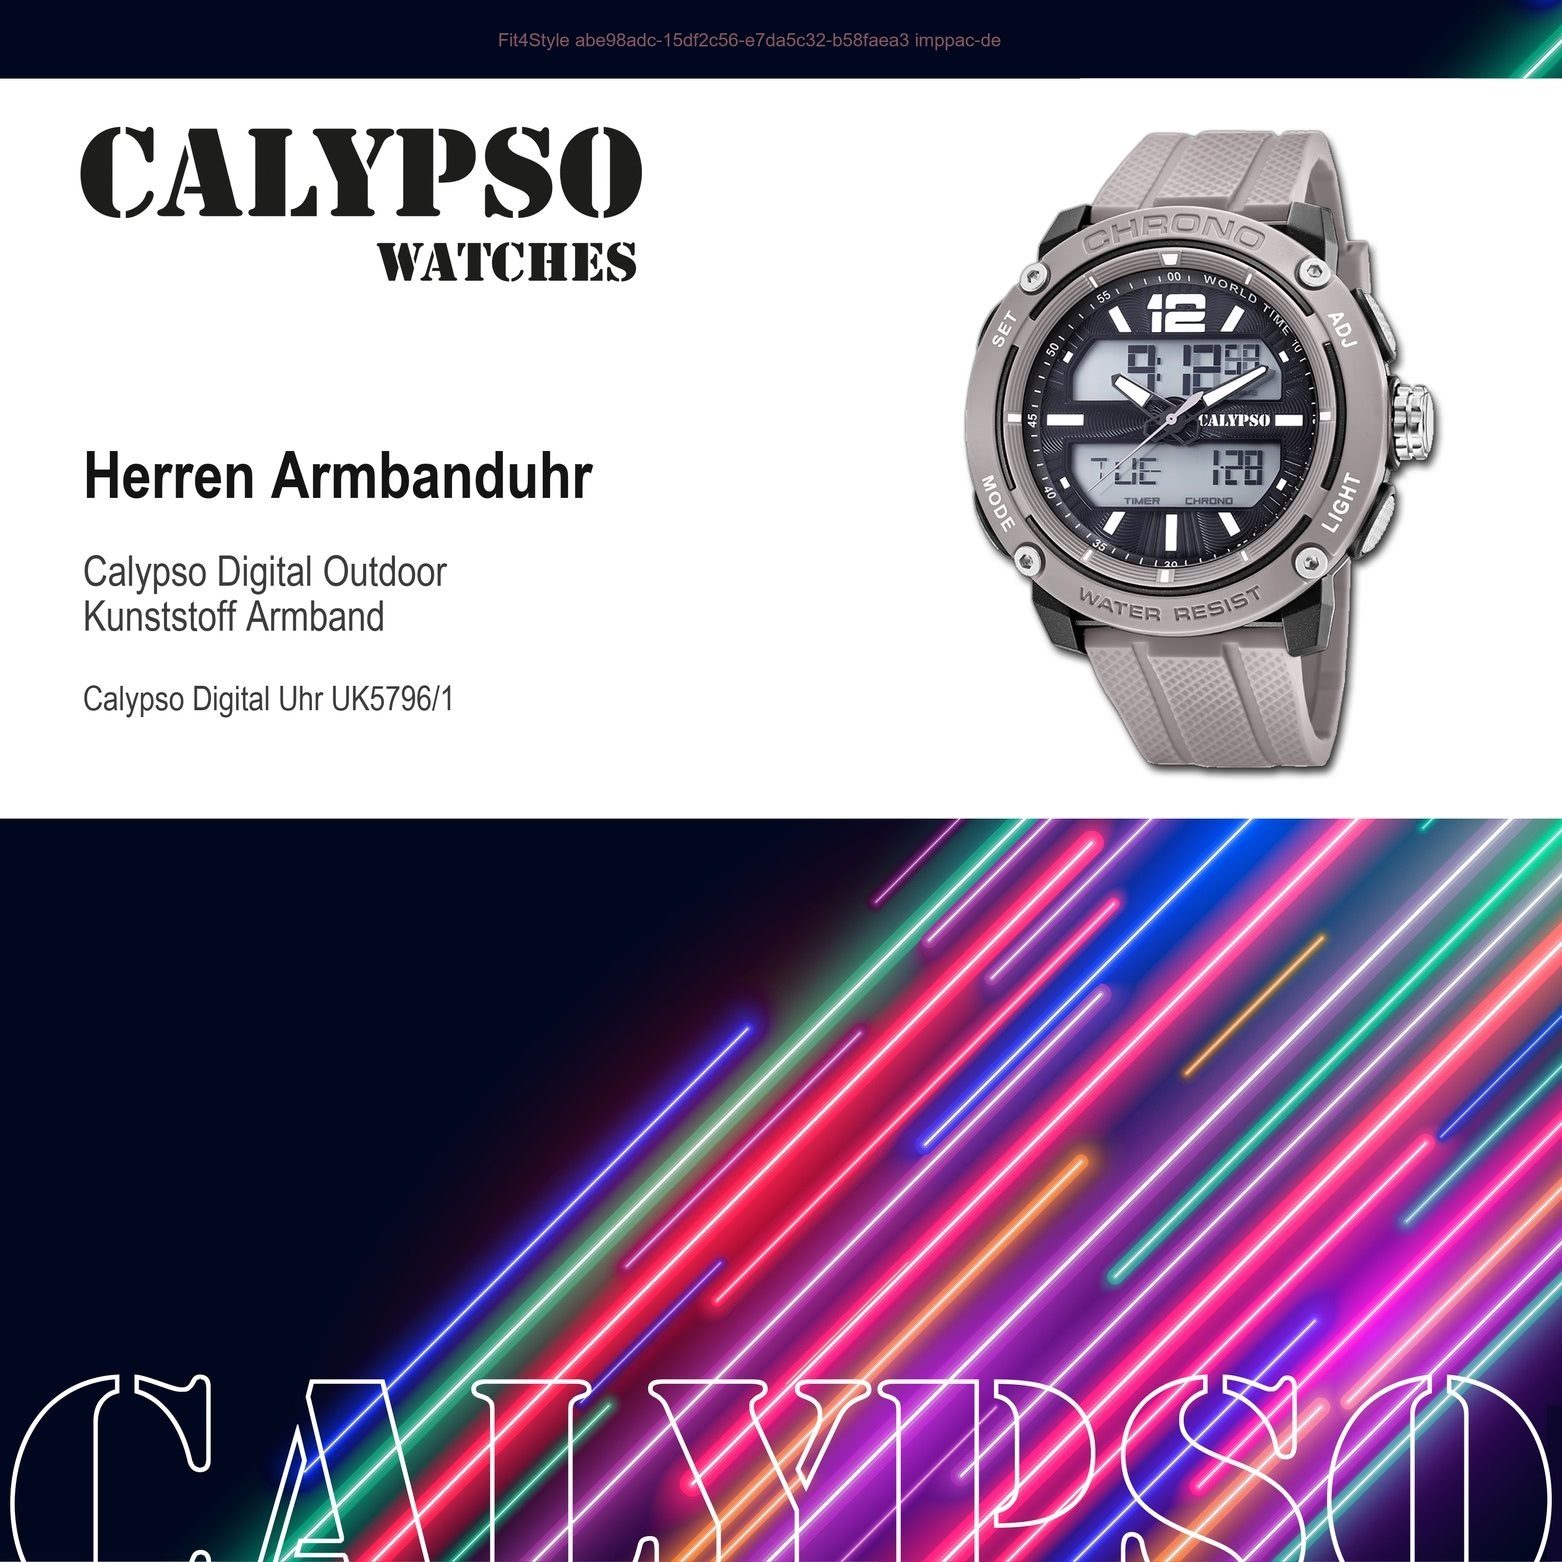 rund, grau, Kunststoffarmband Analog-Digital, WATCHES Herren Calypso Herren Digitaluhr Armbanduhr Uhr CALYPSO Outdoor